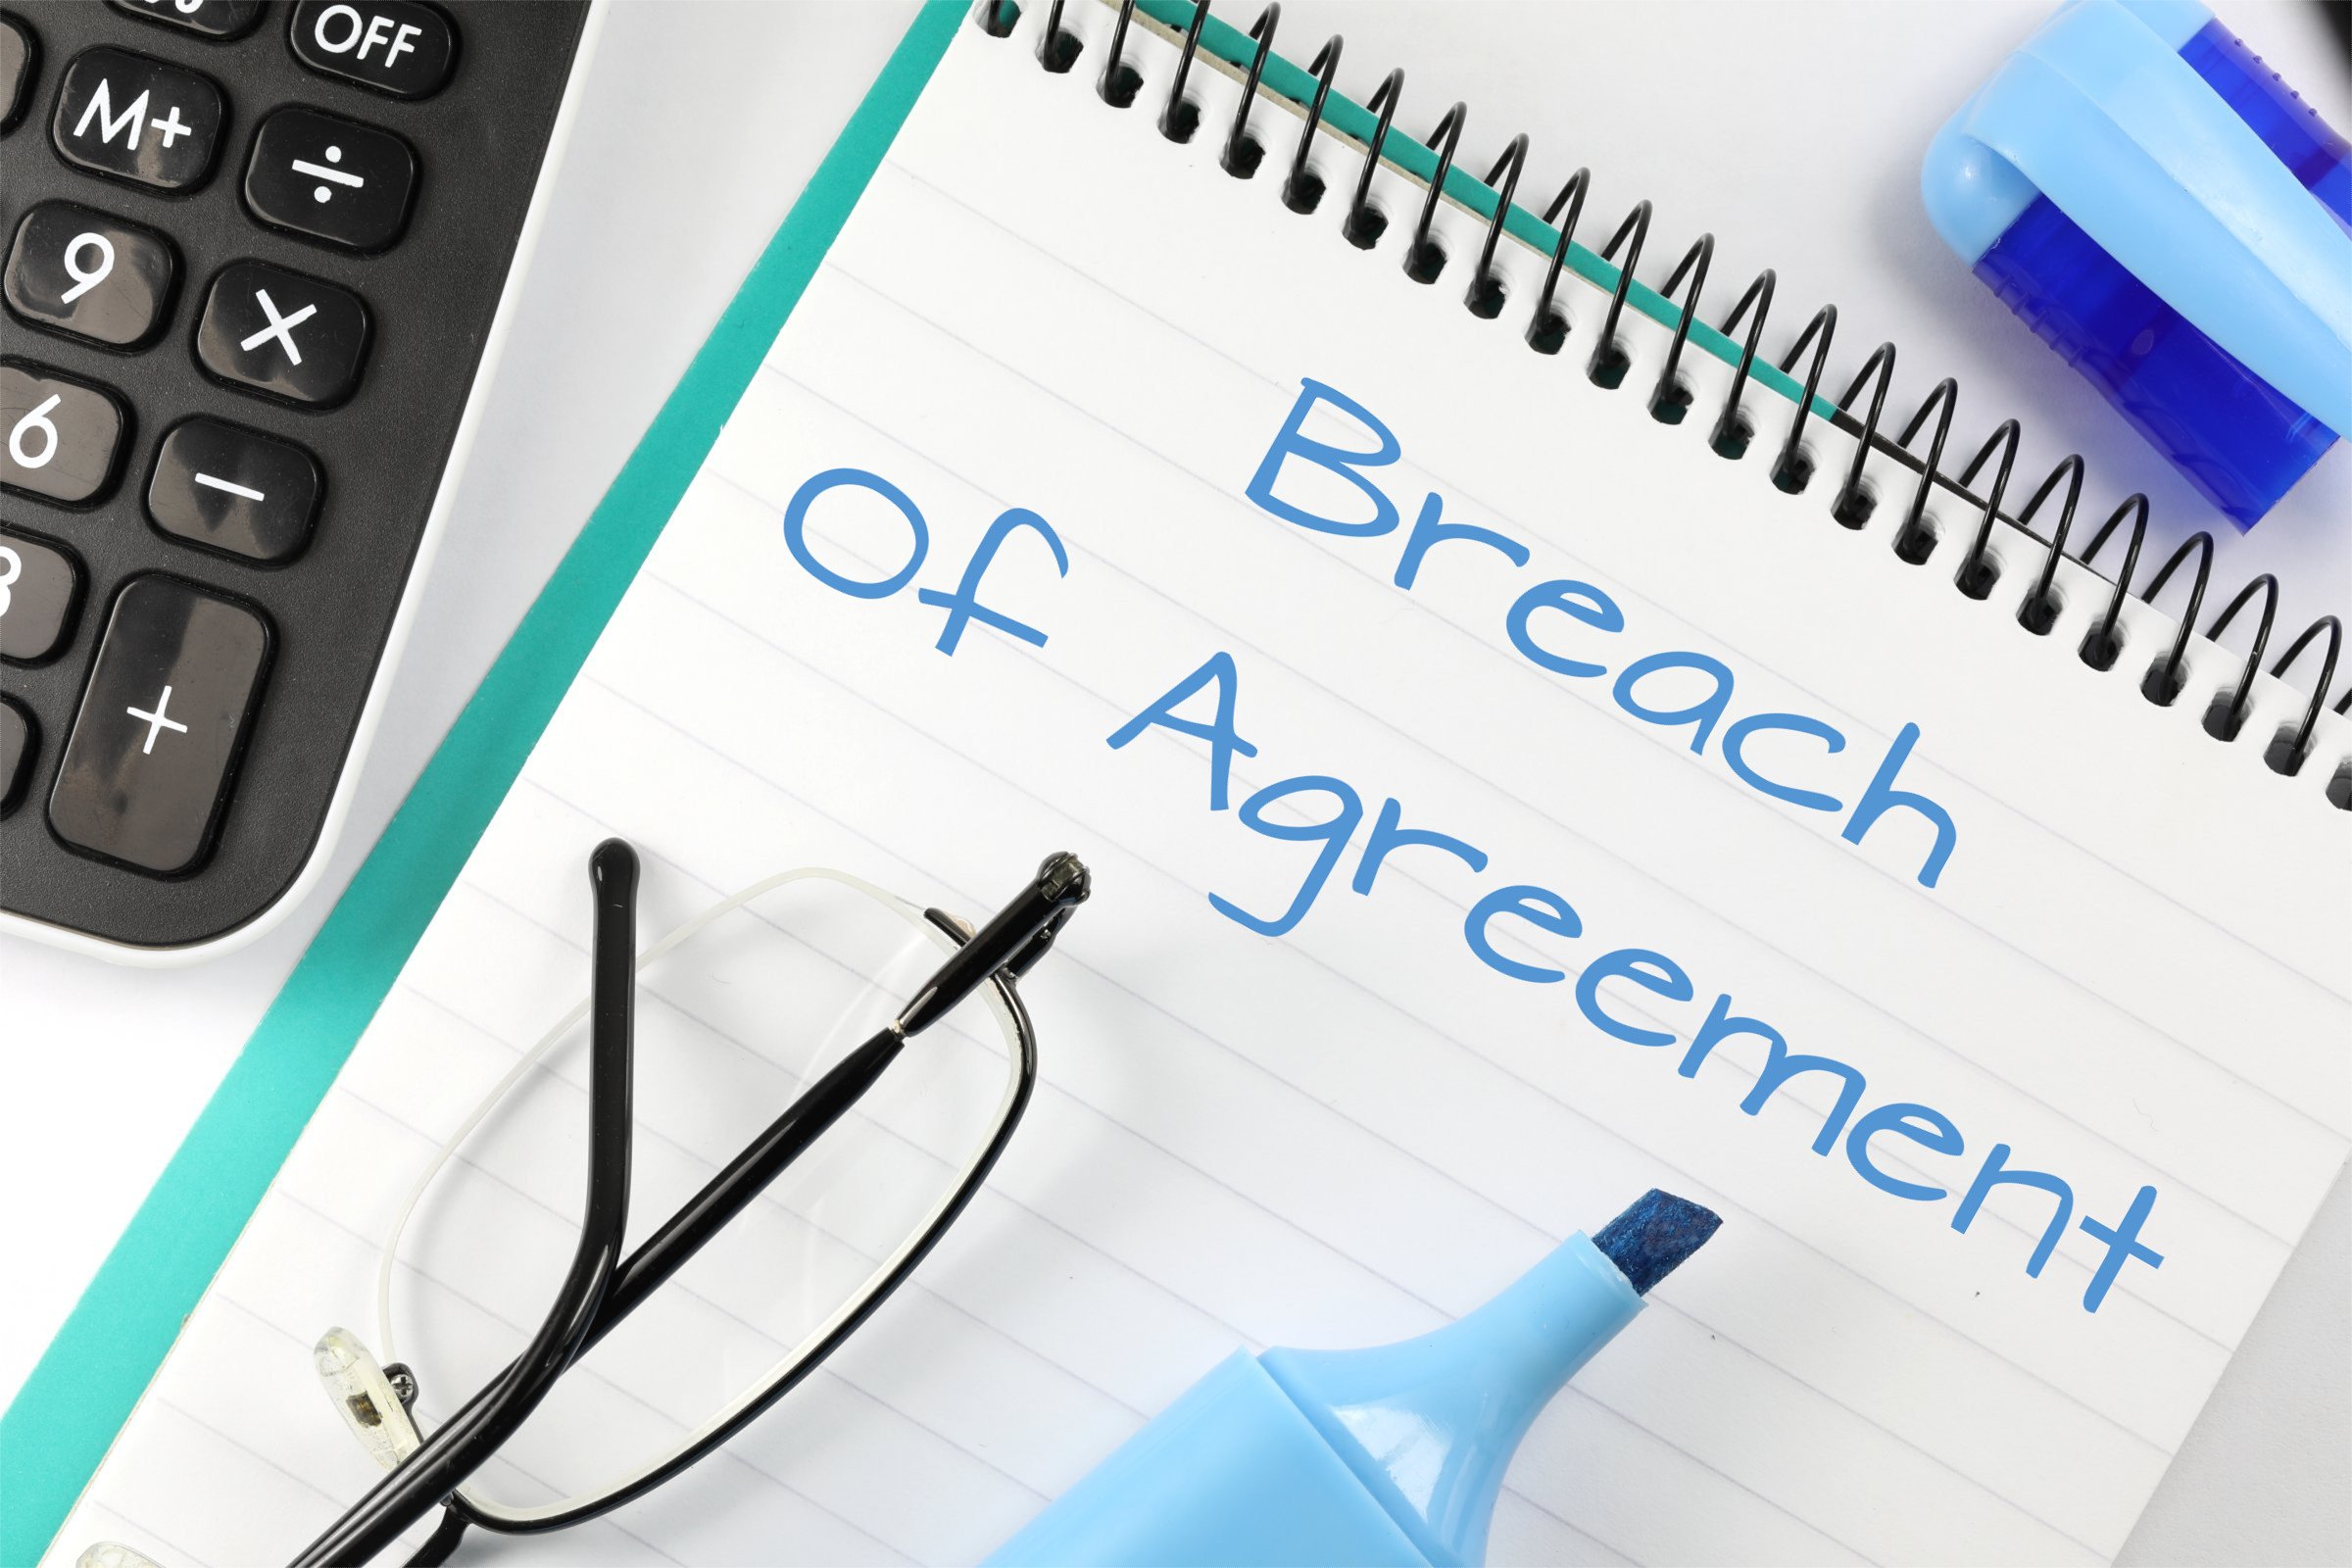 breach of agreement